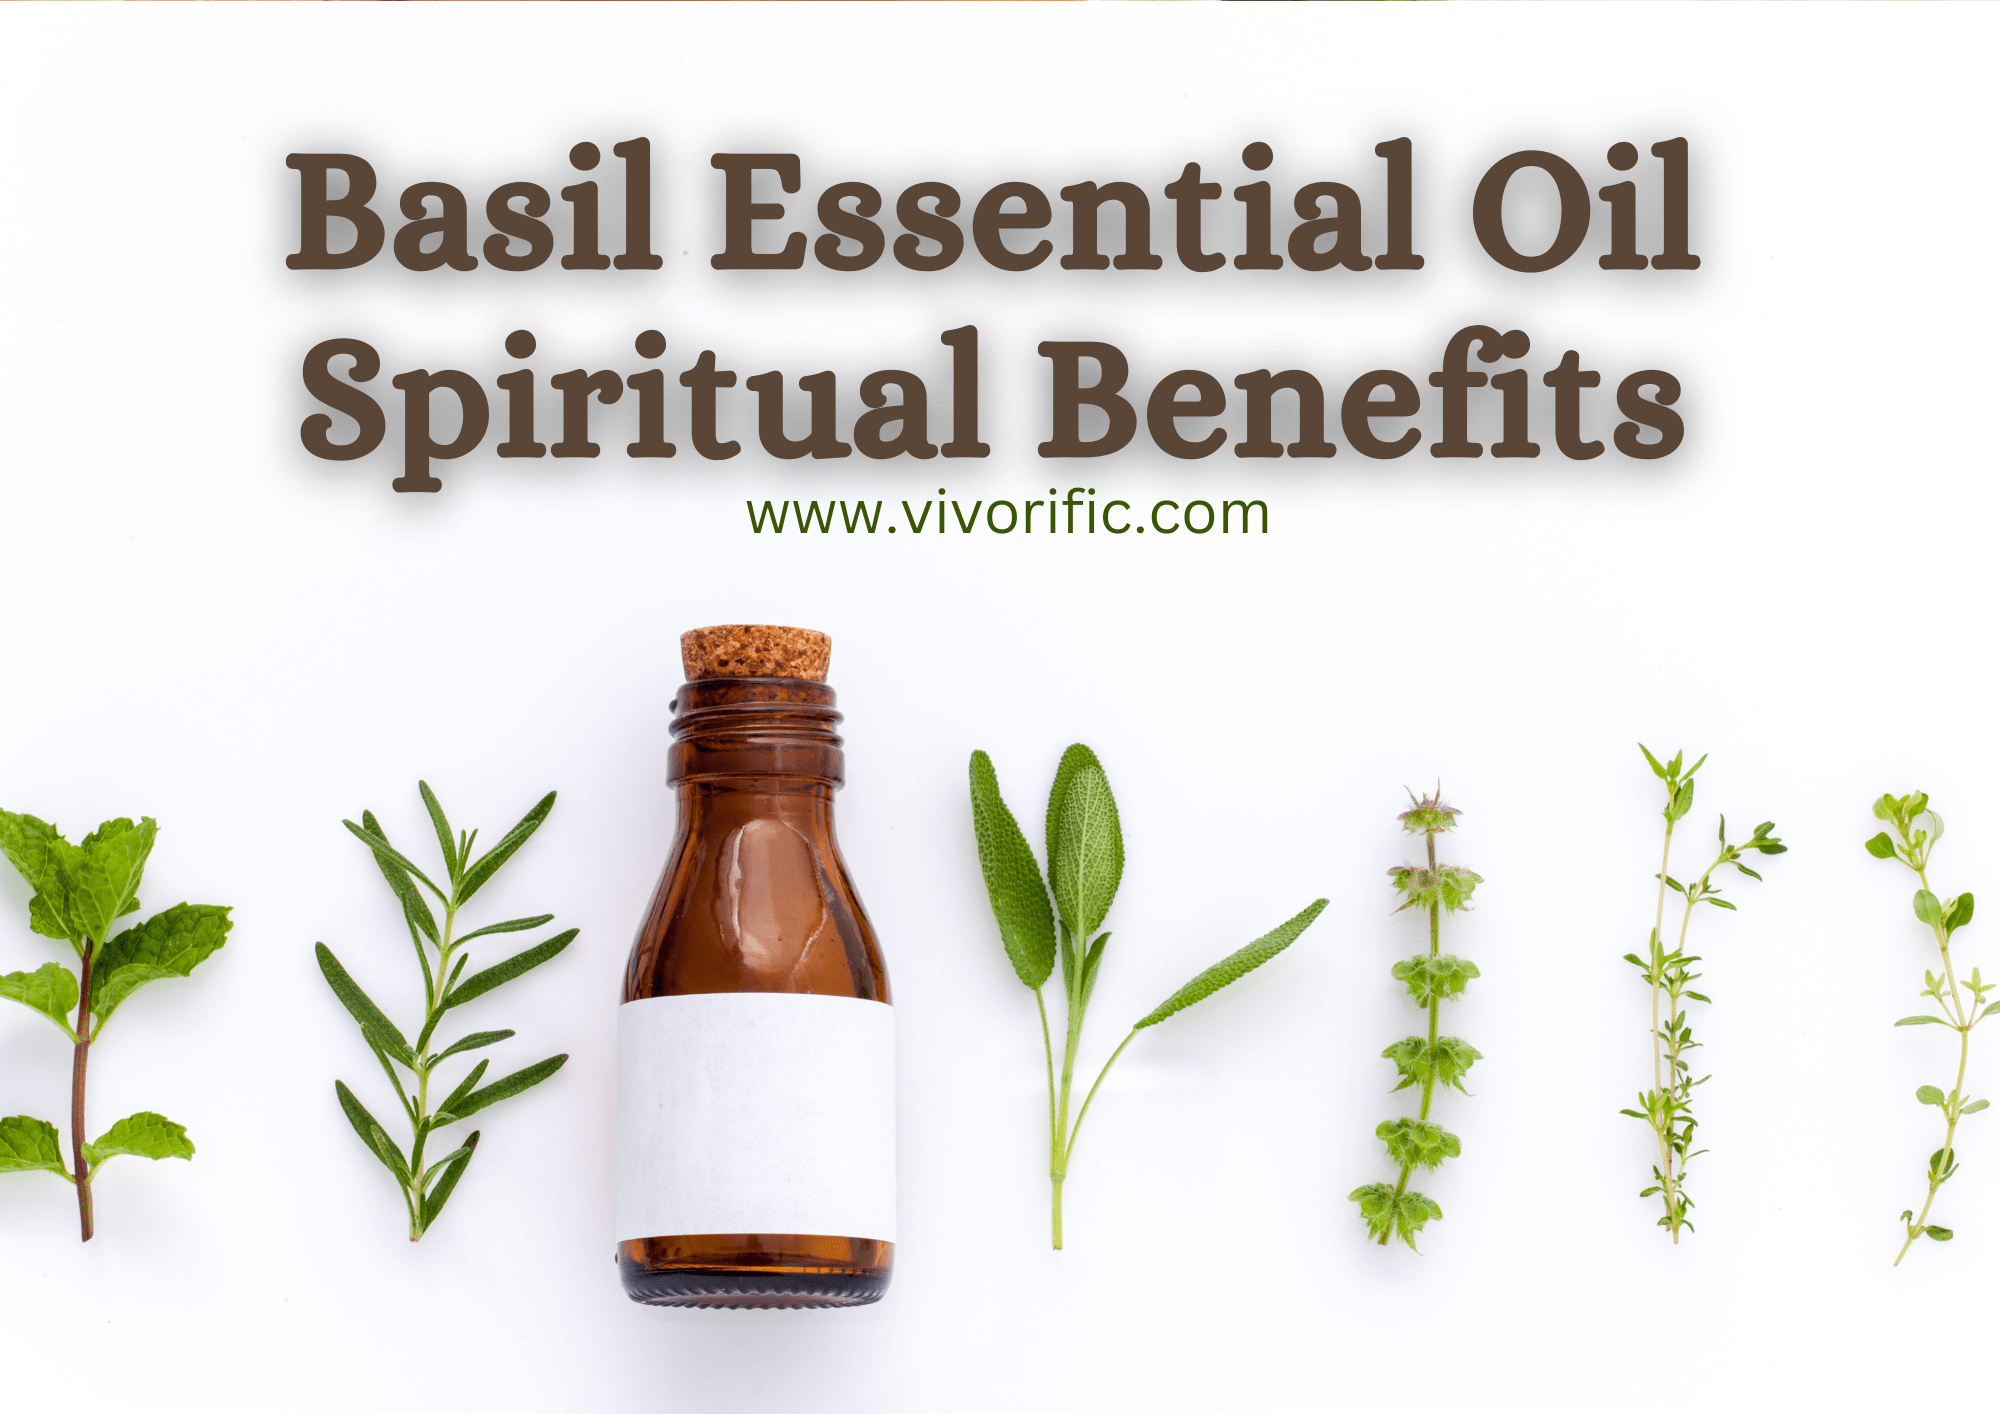 Basil Essential Oil Spiritual Benefits